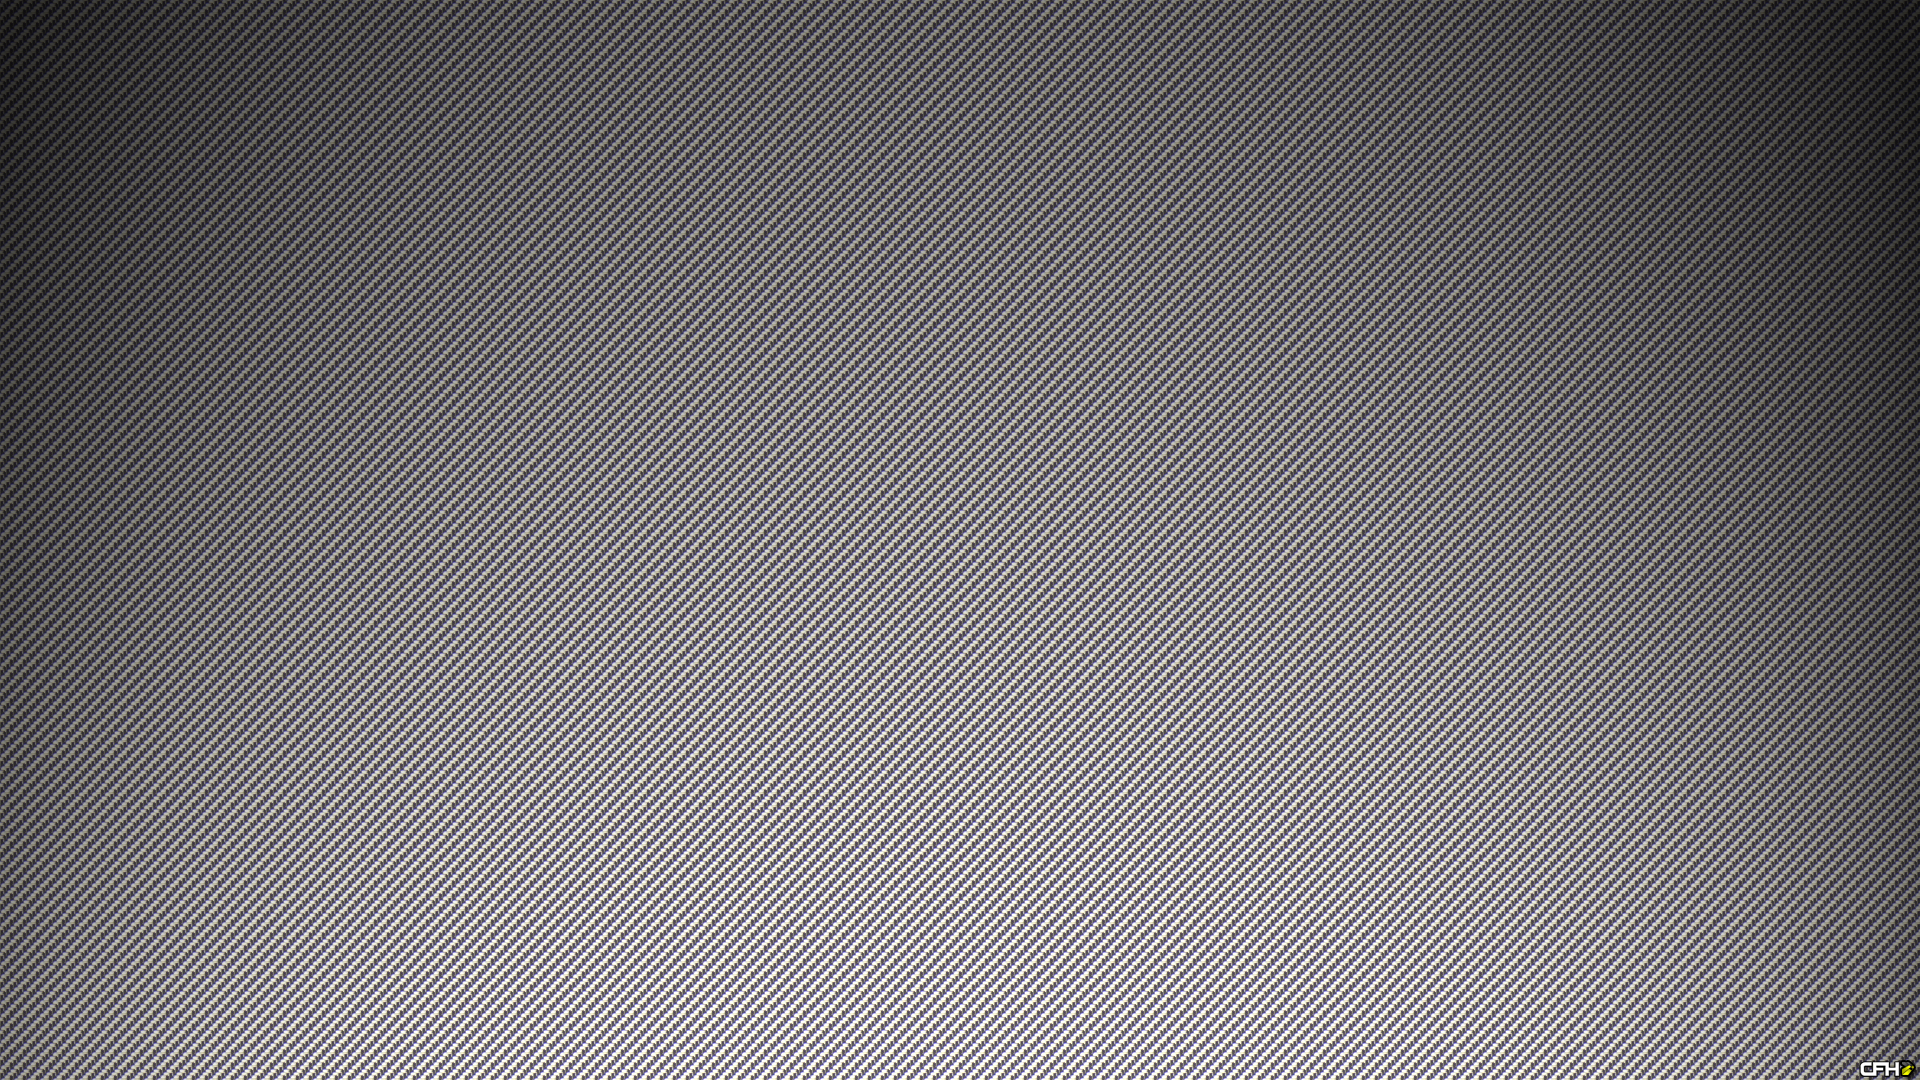 3D Carbon Wallpaper HD Background | I HD Images